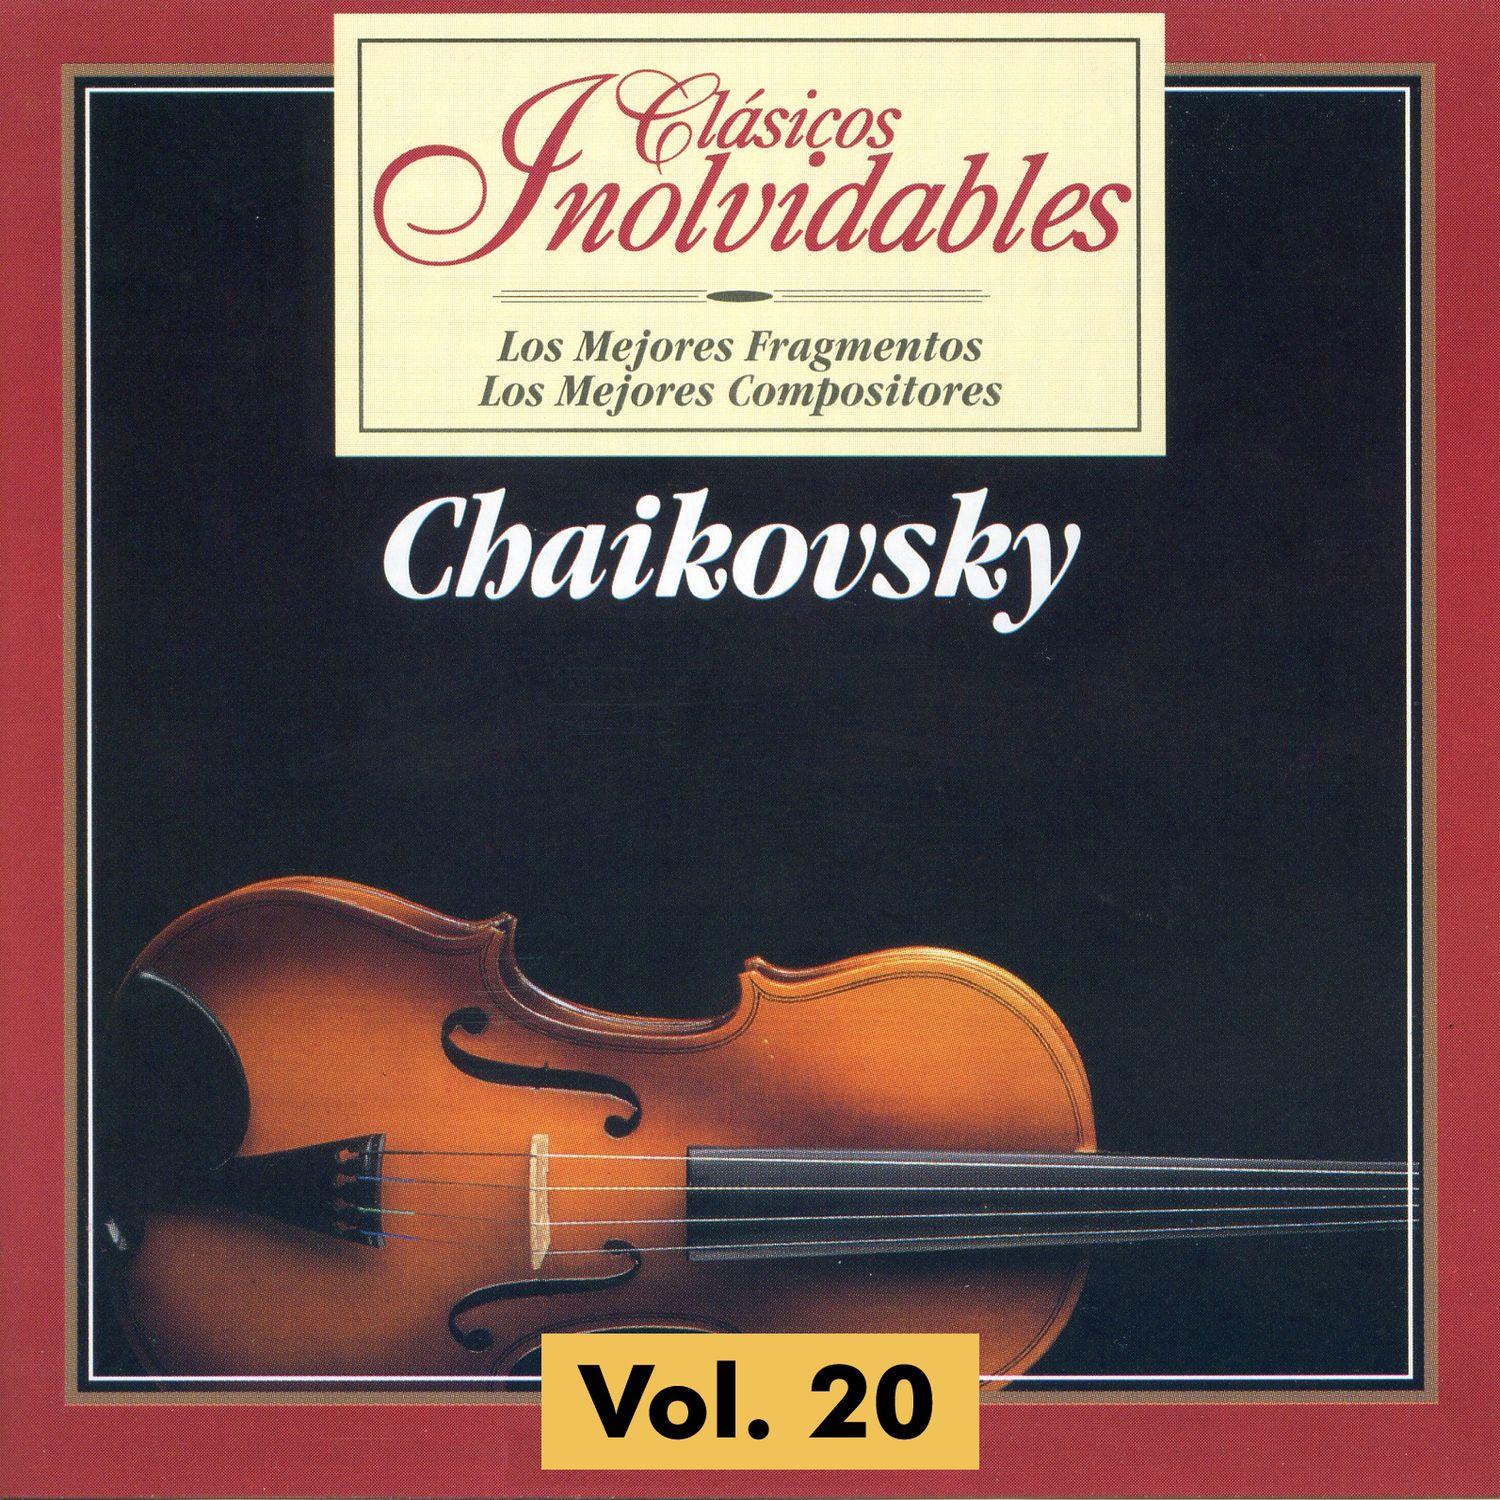 Serenade for Strings in C Major Op. 48: IV. Finale - Theme russo